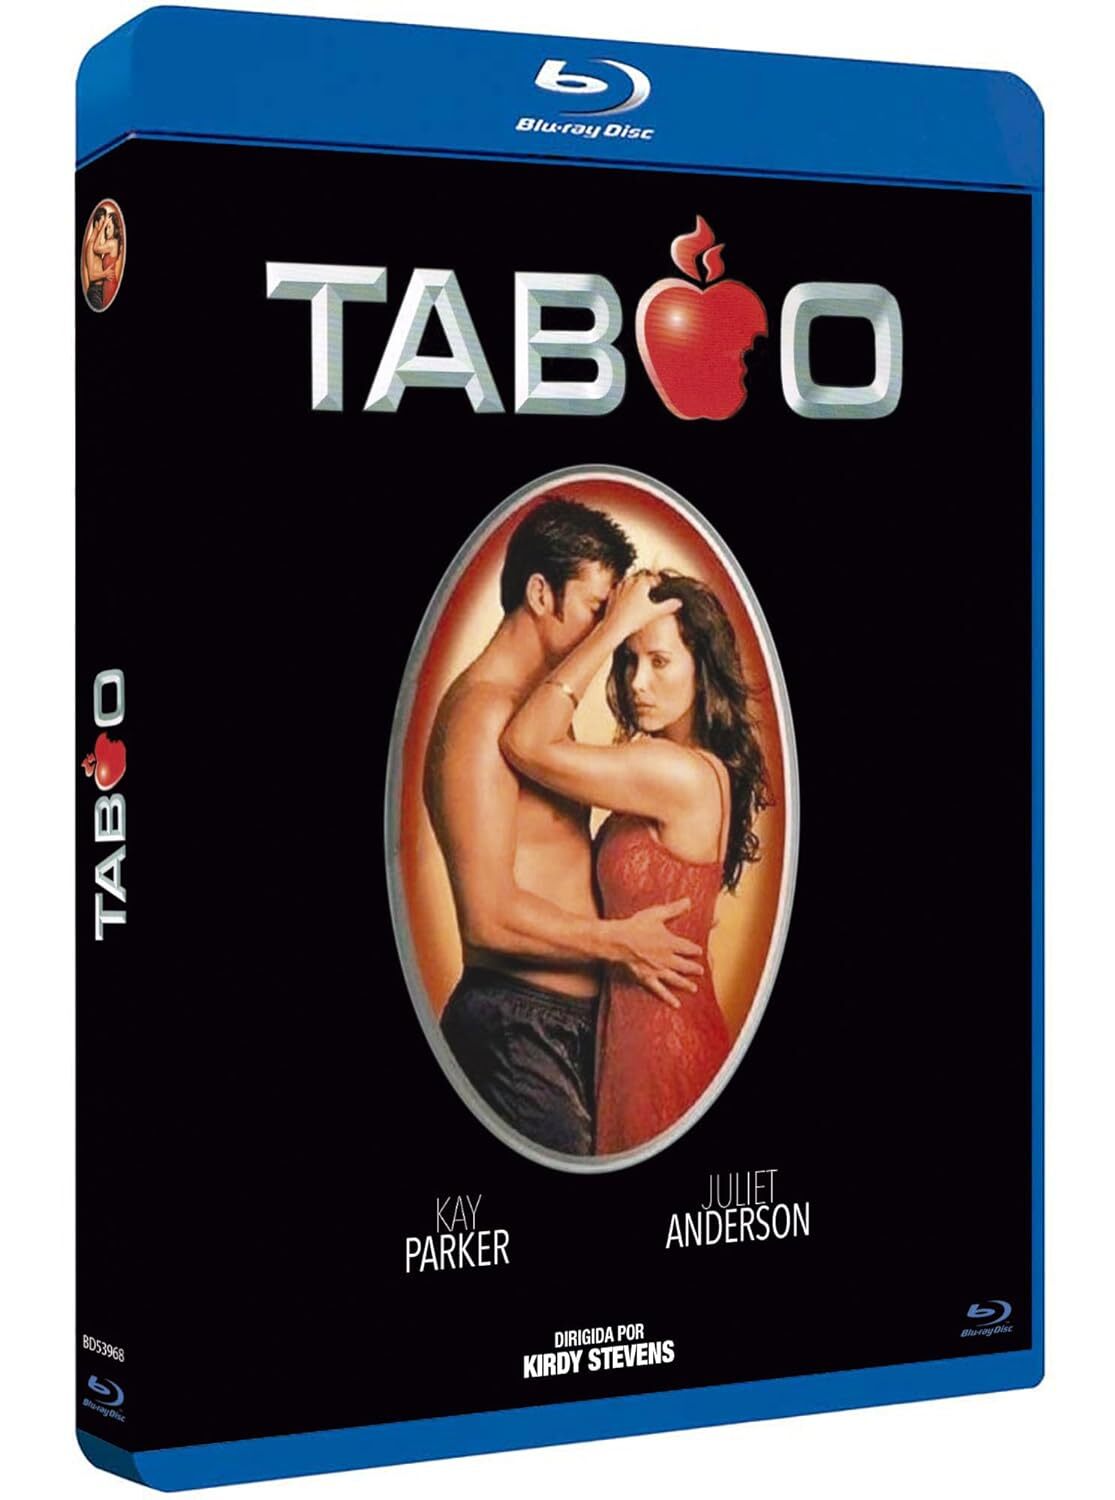 ann marie duke recommends Taboo Starring Kay Parker